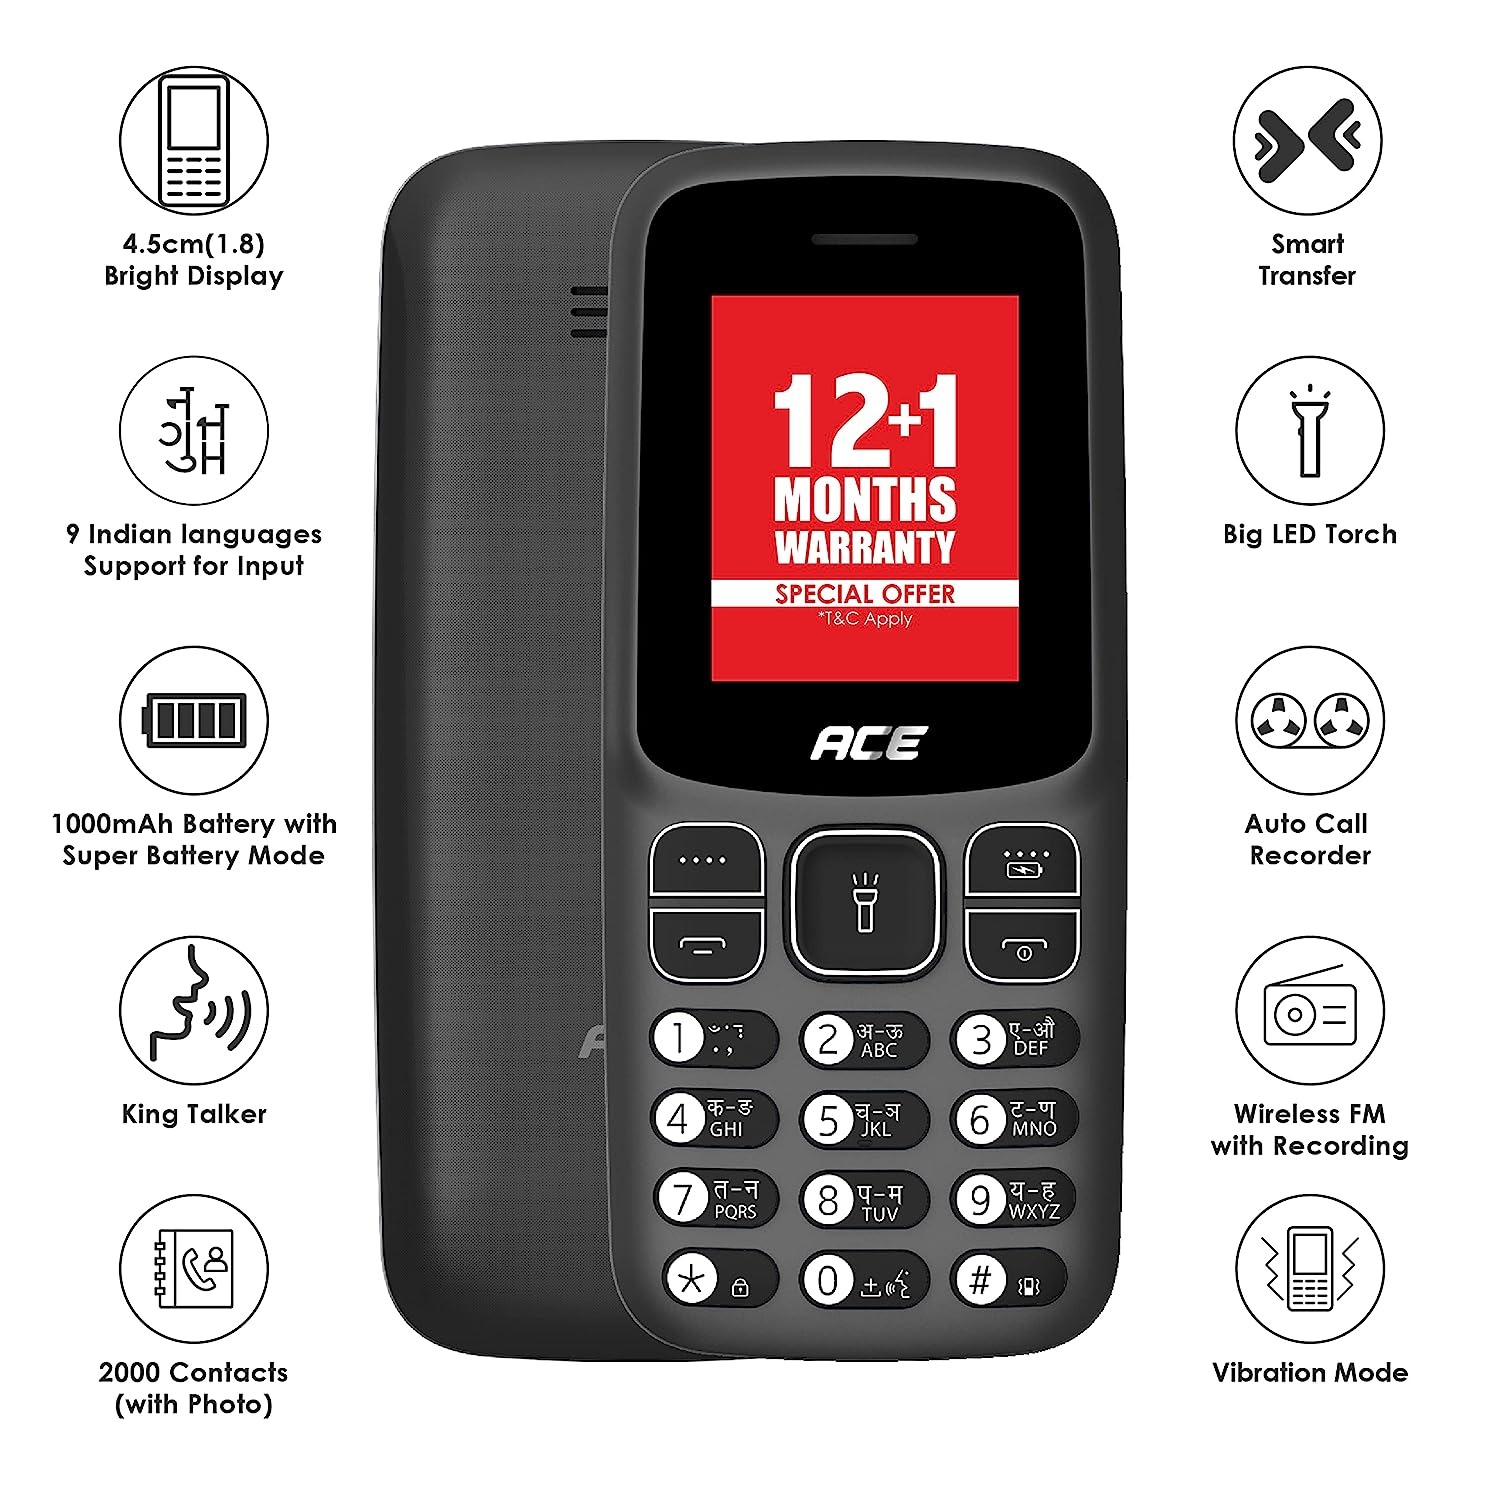 Itel Ace 2 Black keypad Mobile Phone - Black